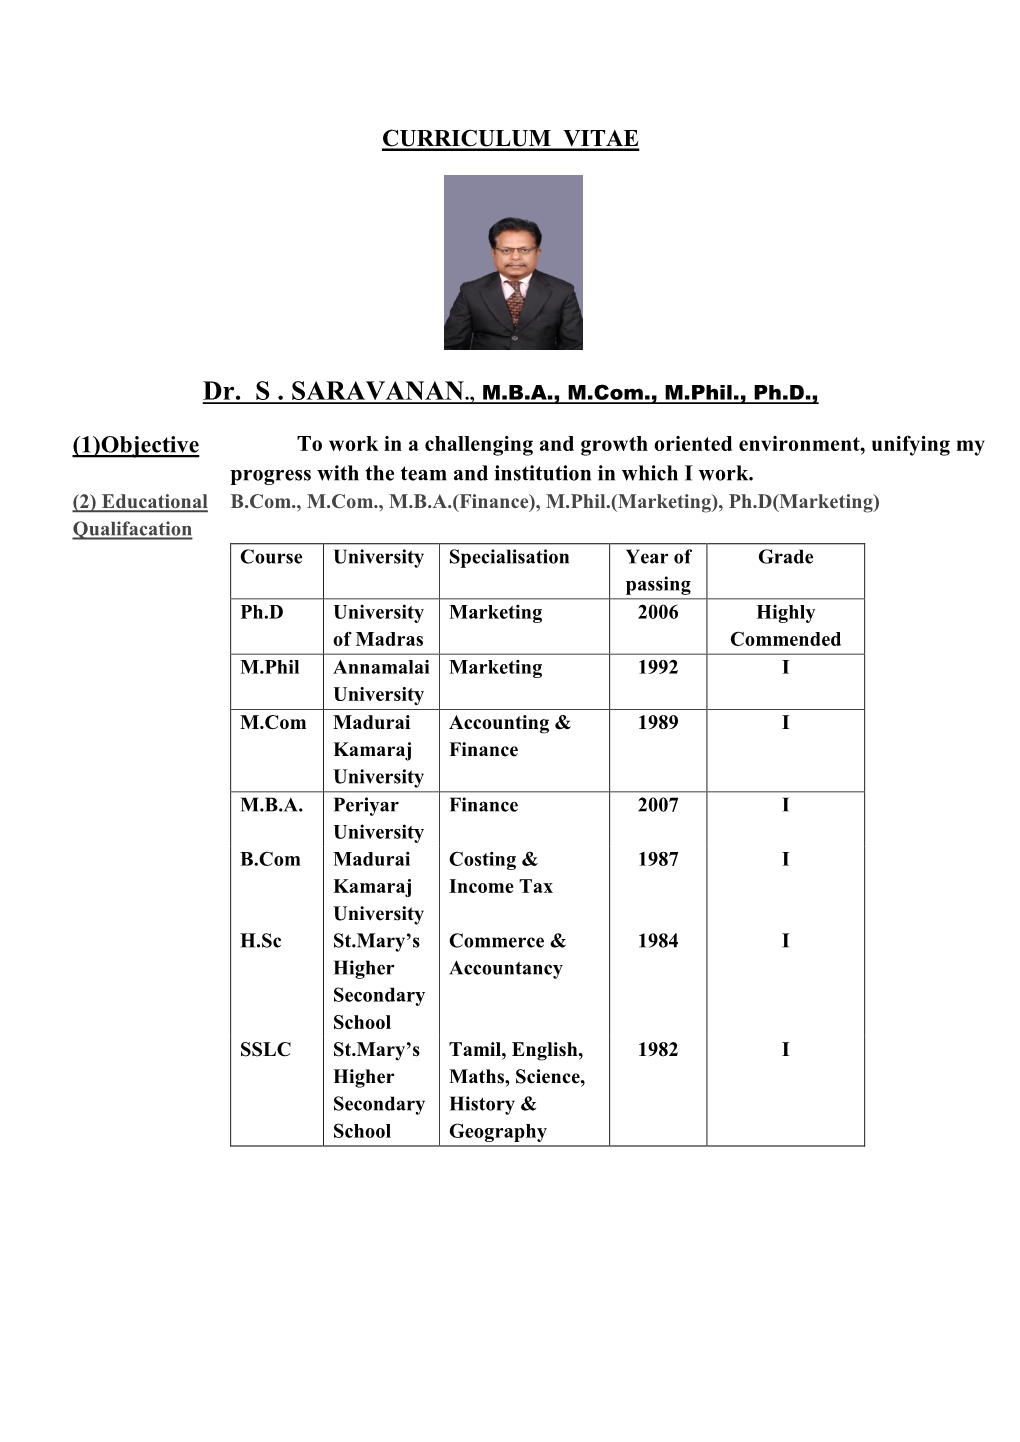 Dr. S . SARAVANAN., MBA, M.Com., M.Phil., Ph.D